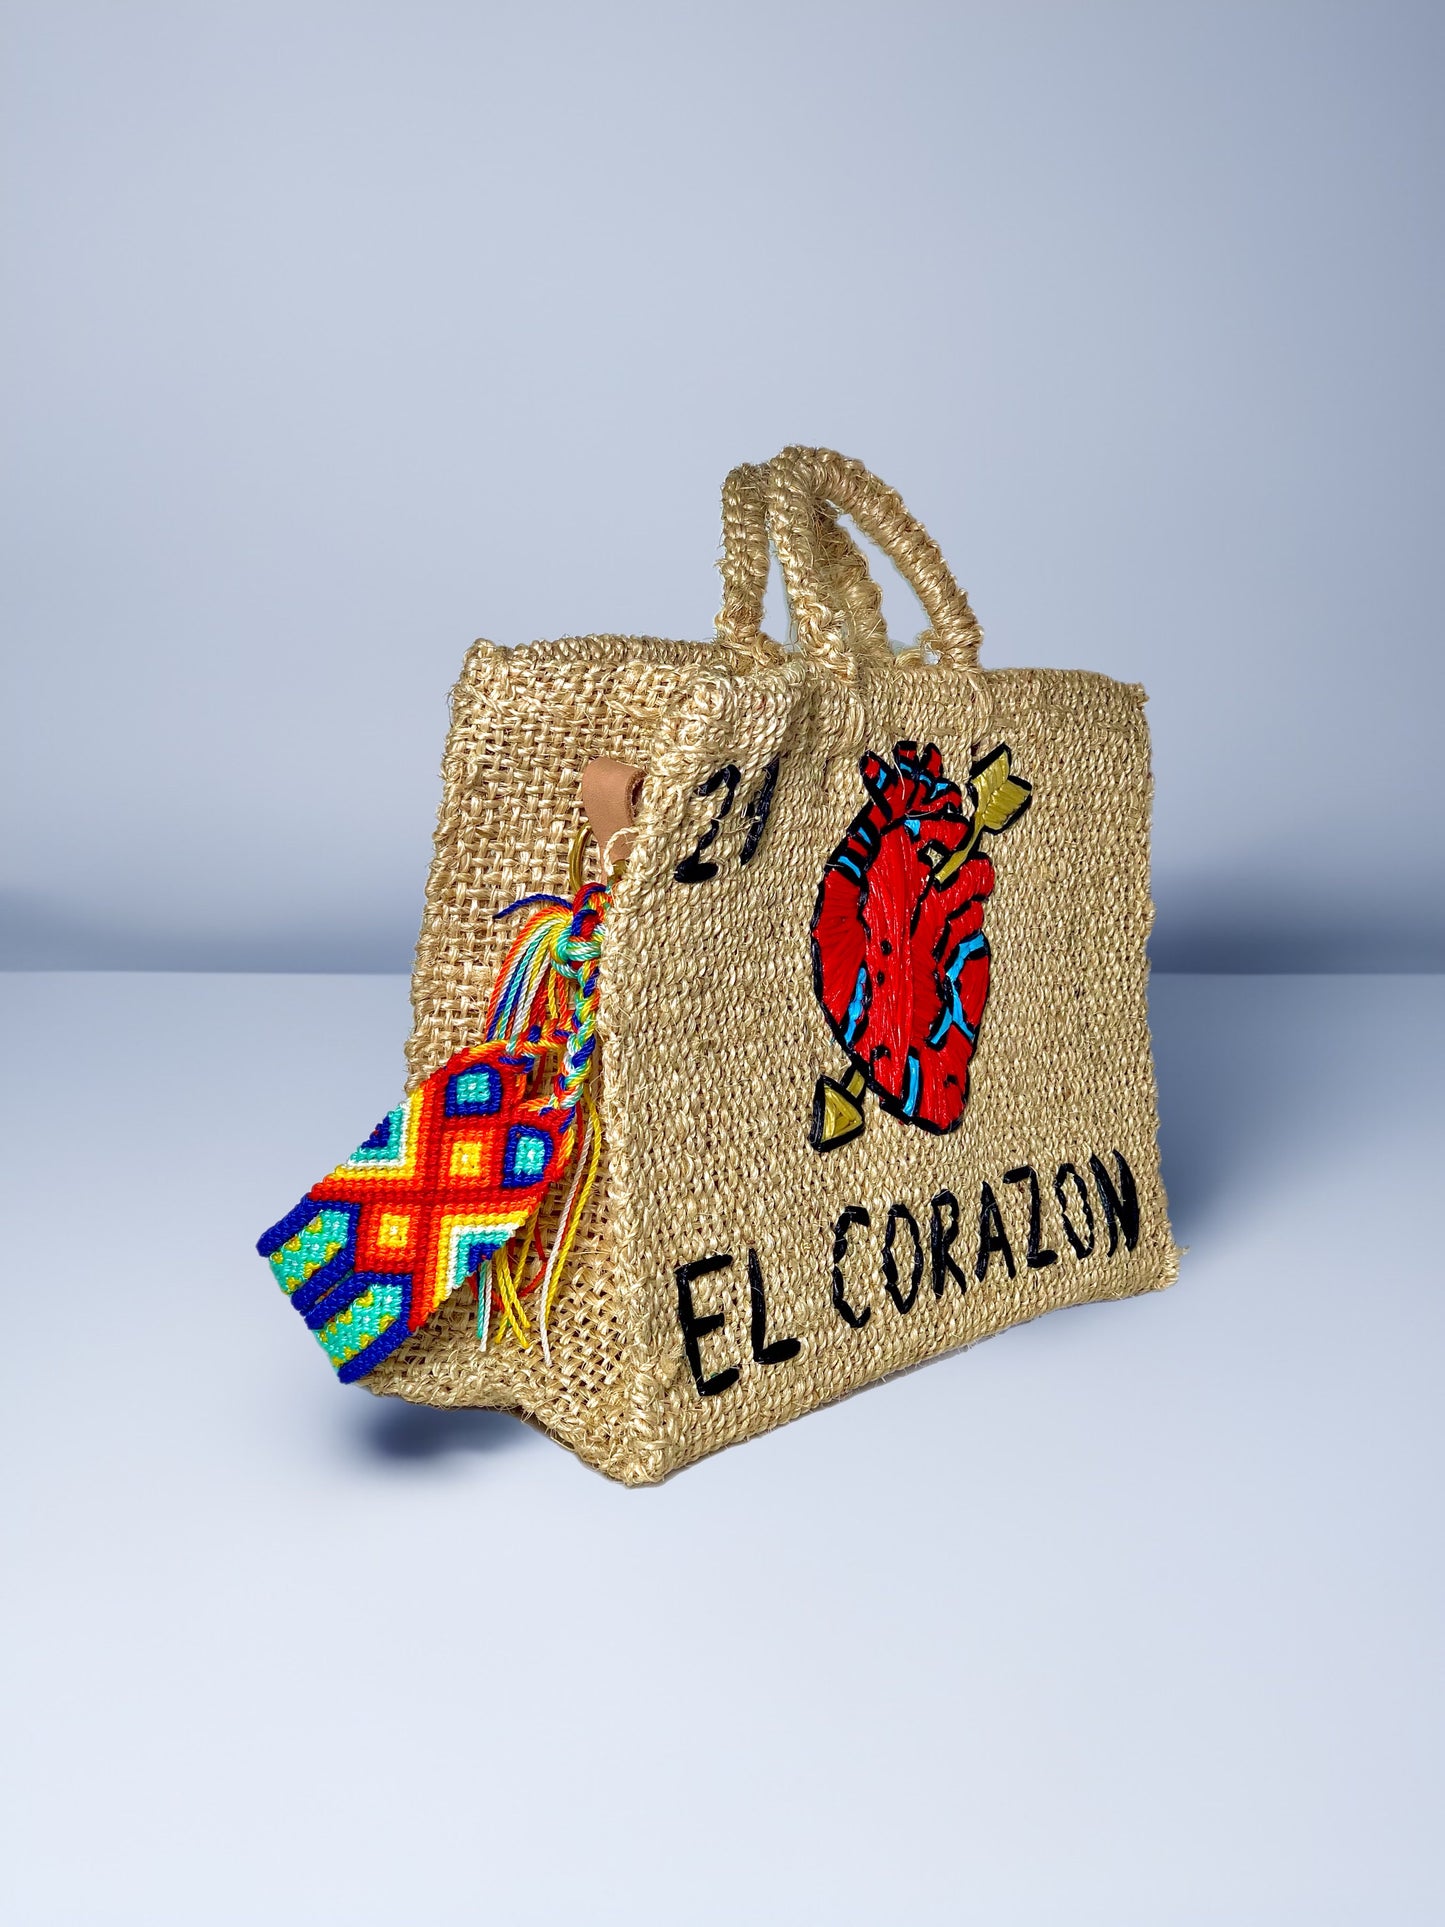 El Corazon lottery henequen bag